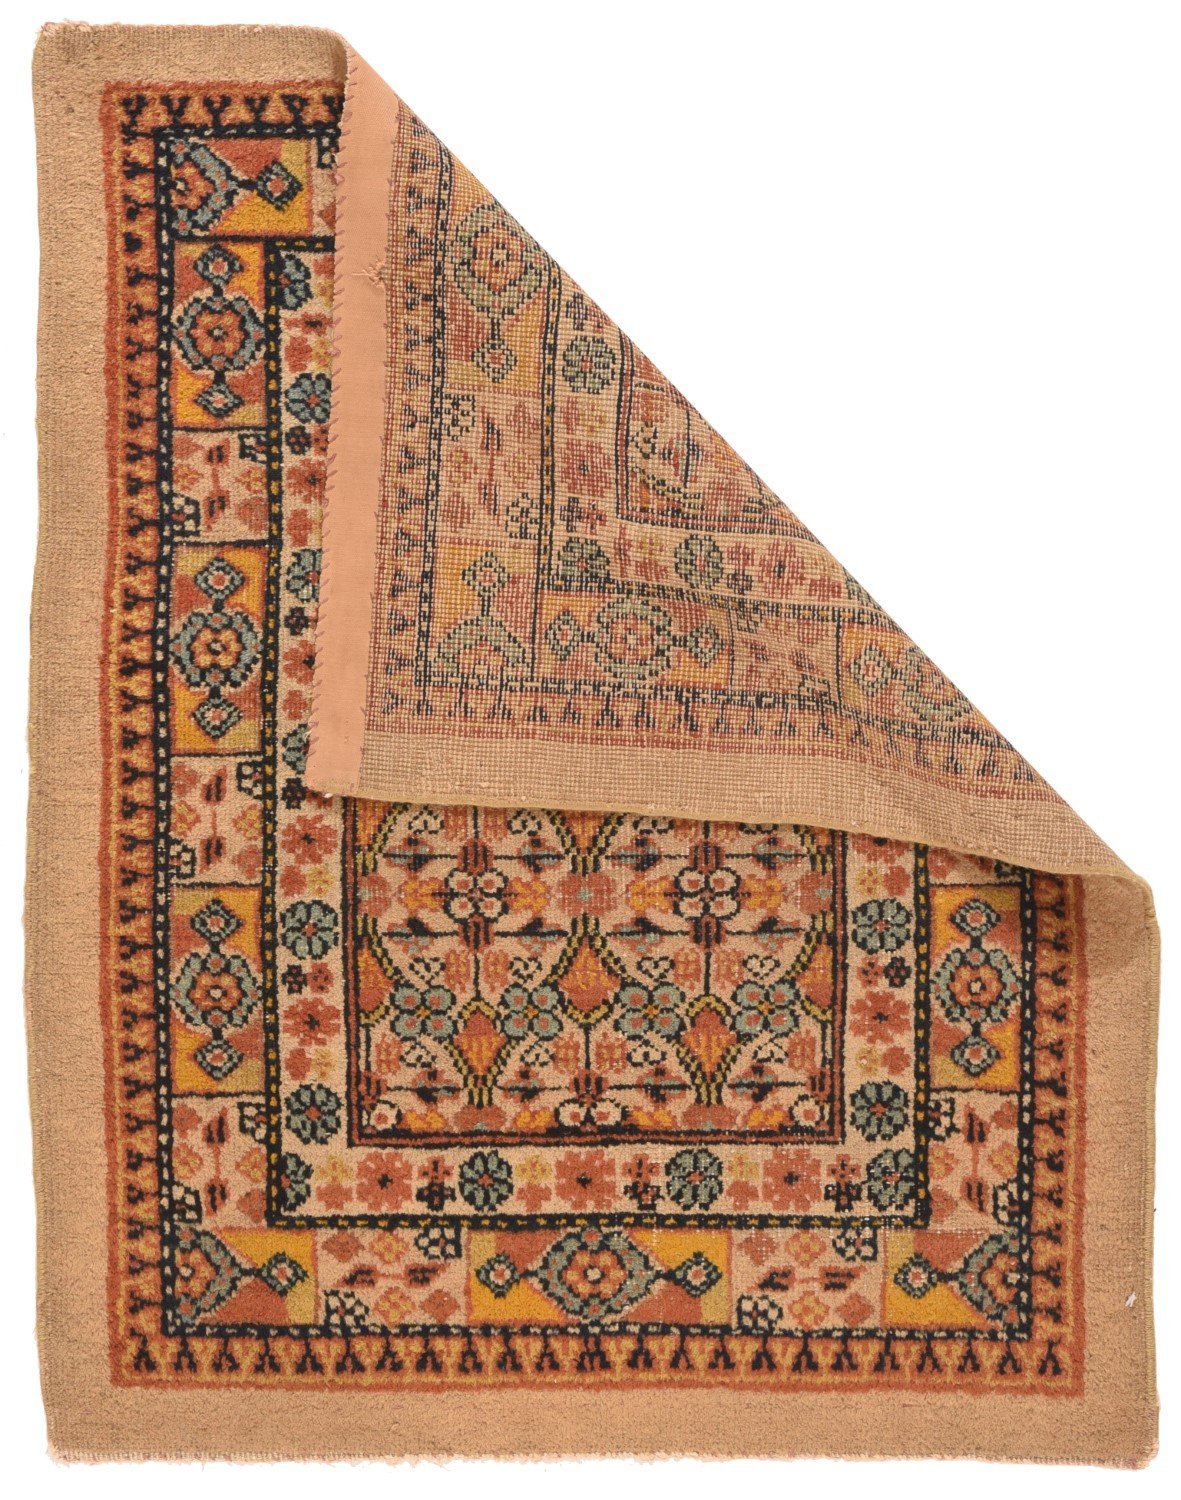 Fine Antique Persian Tribal/Sarab Rug